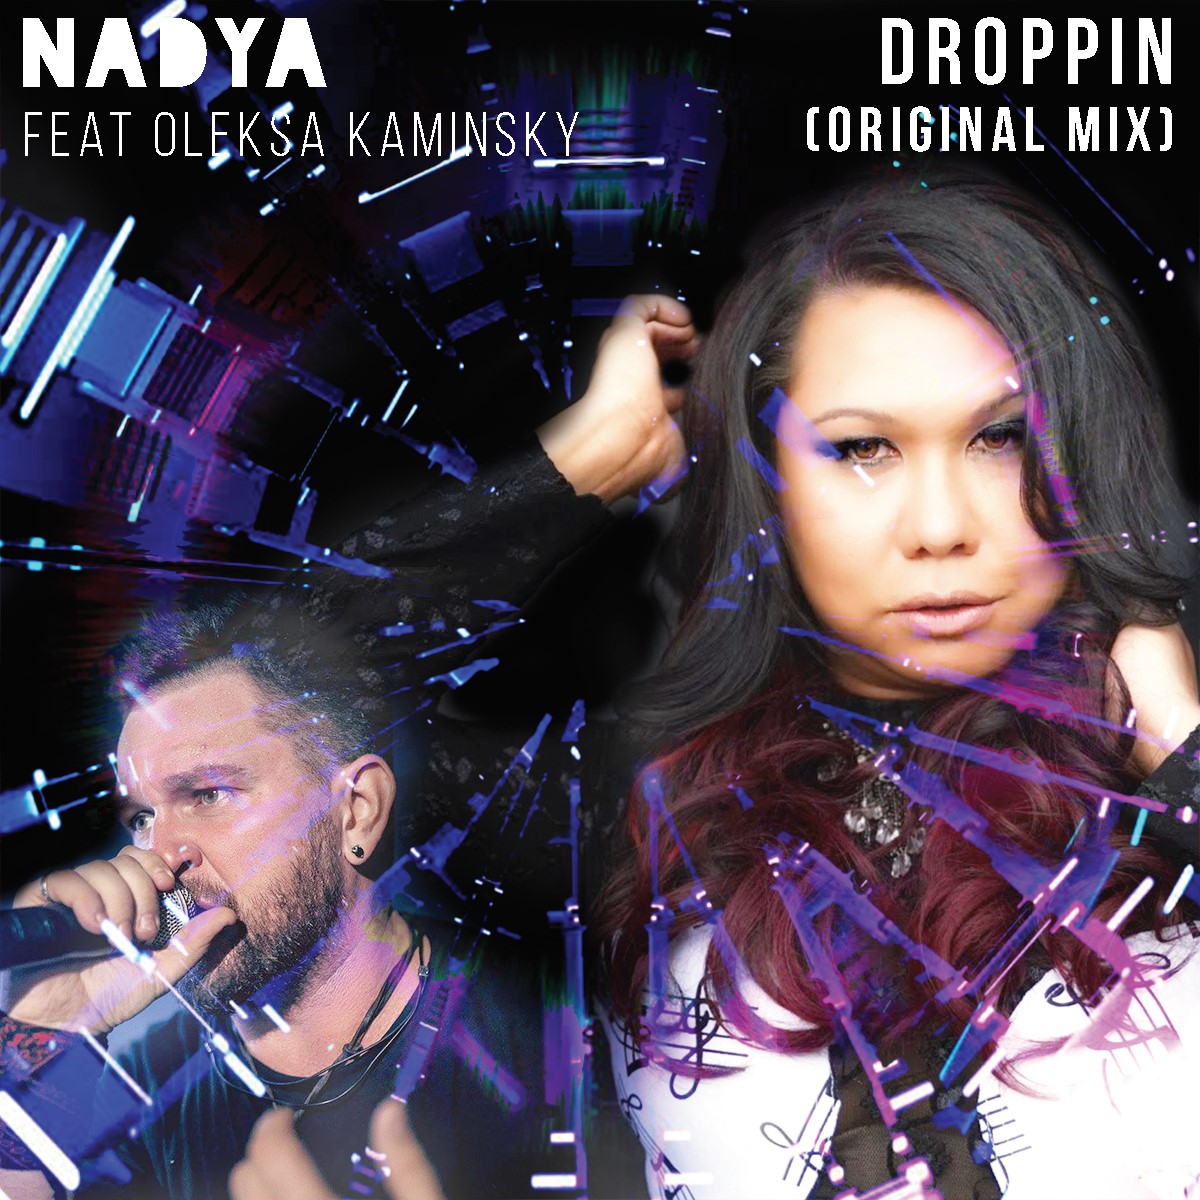 Nadya - Droppin